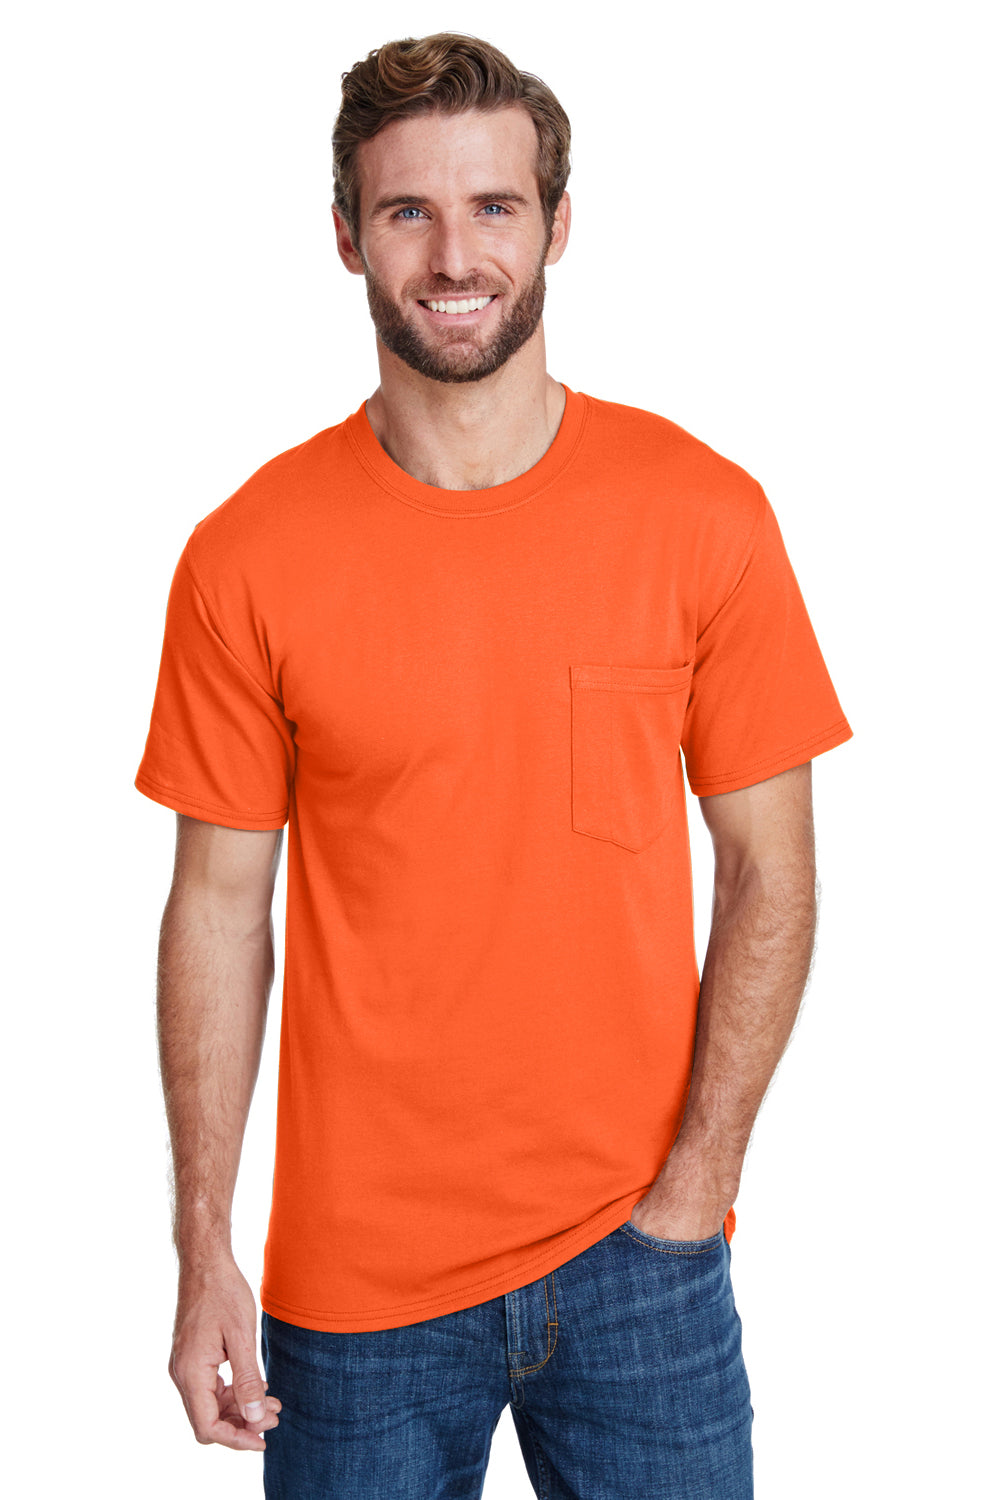 Hanes W110 Mens Workwear Short Sleeve Crewneck T-Shirt w/ Pocket Safety Orange Front